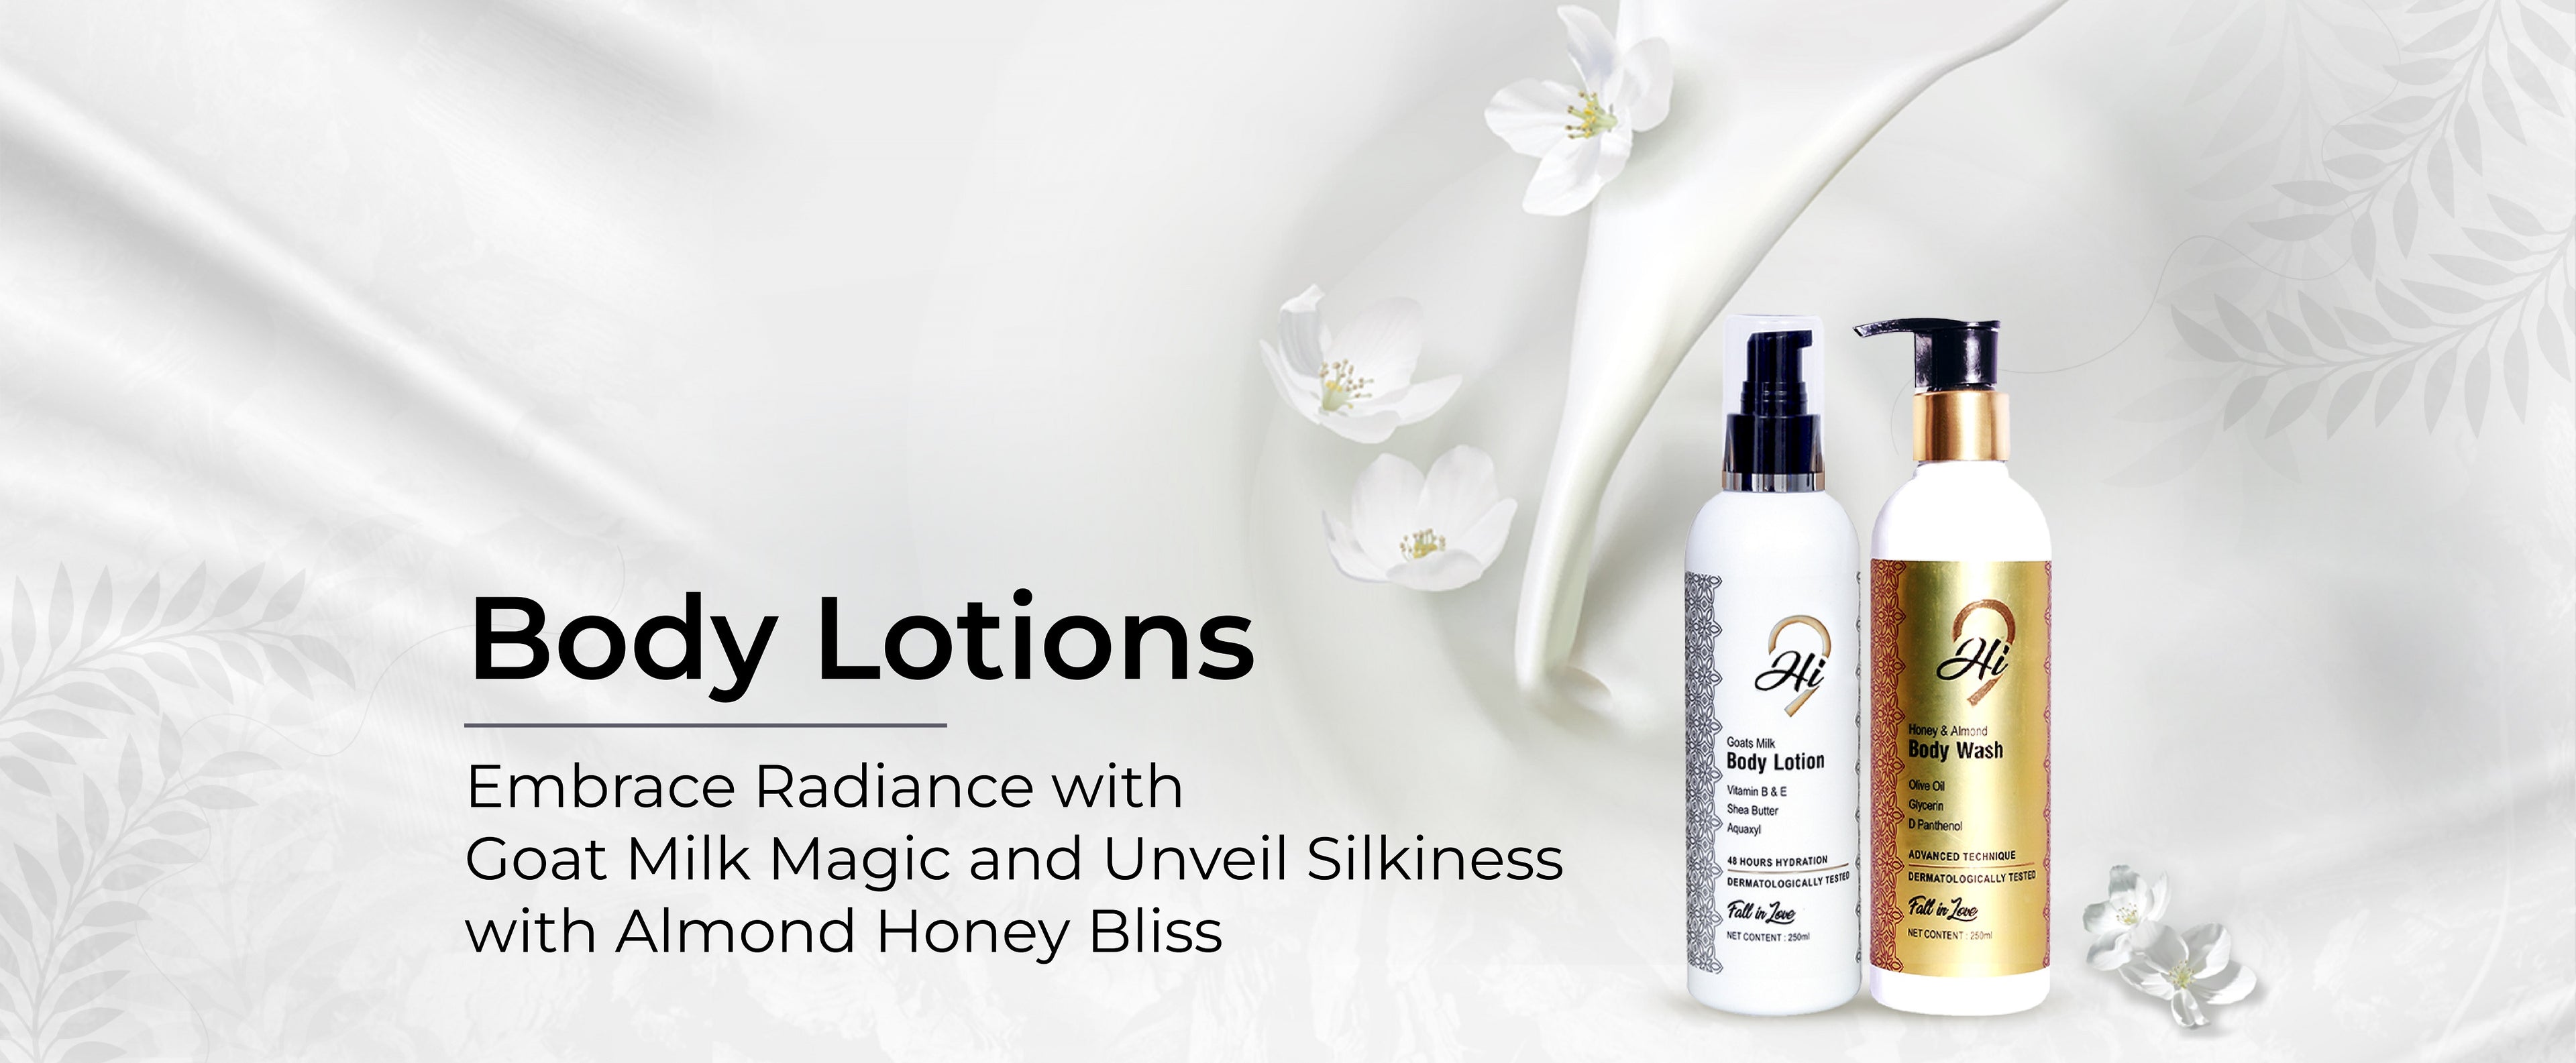 Hi9 Body lotion products range